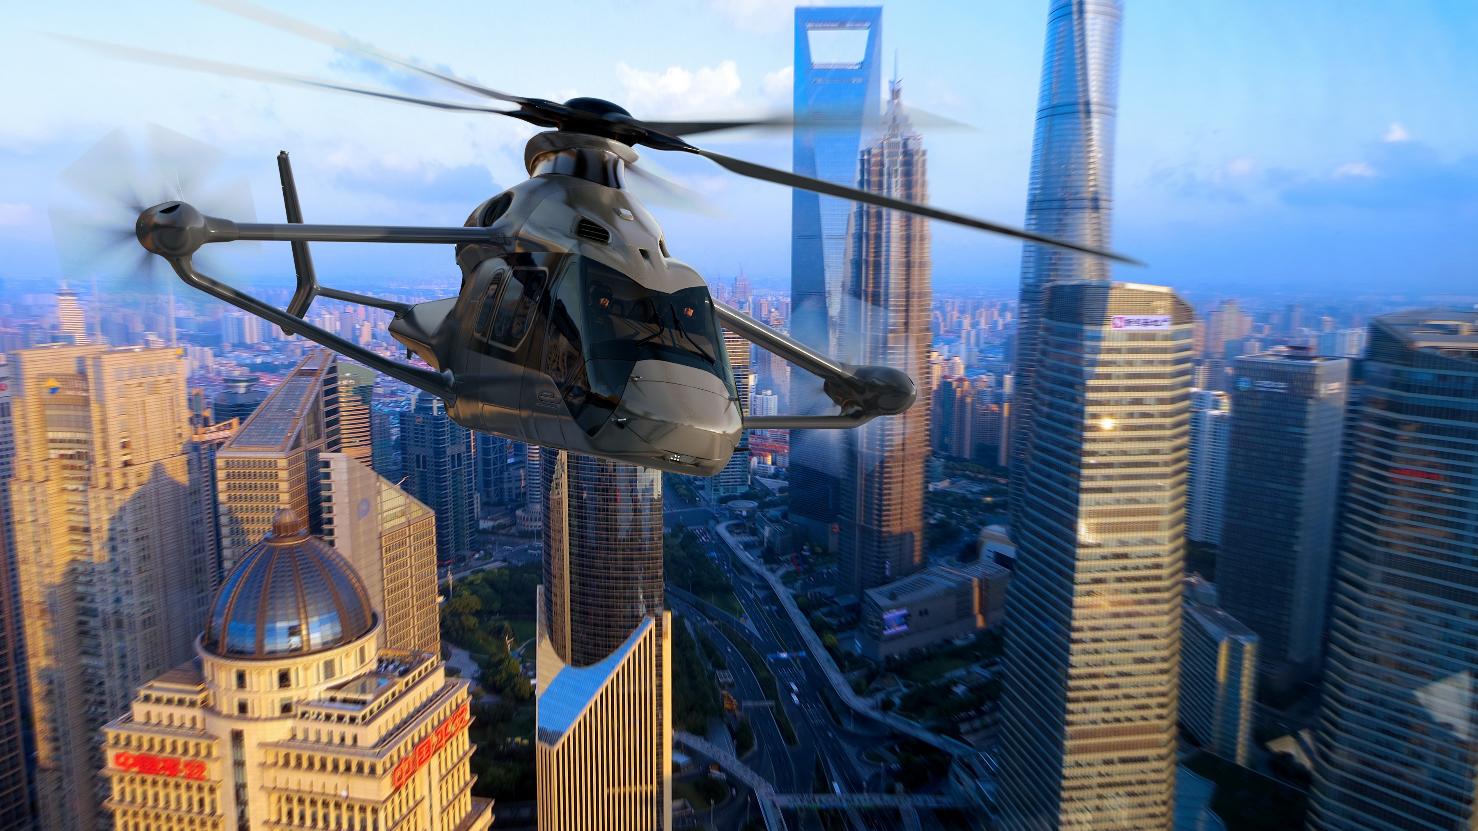 Heli-Expo 2018 : L’Aneto sélectionné pour motoriser le Racer d'Airbus Helicopters